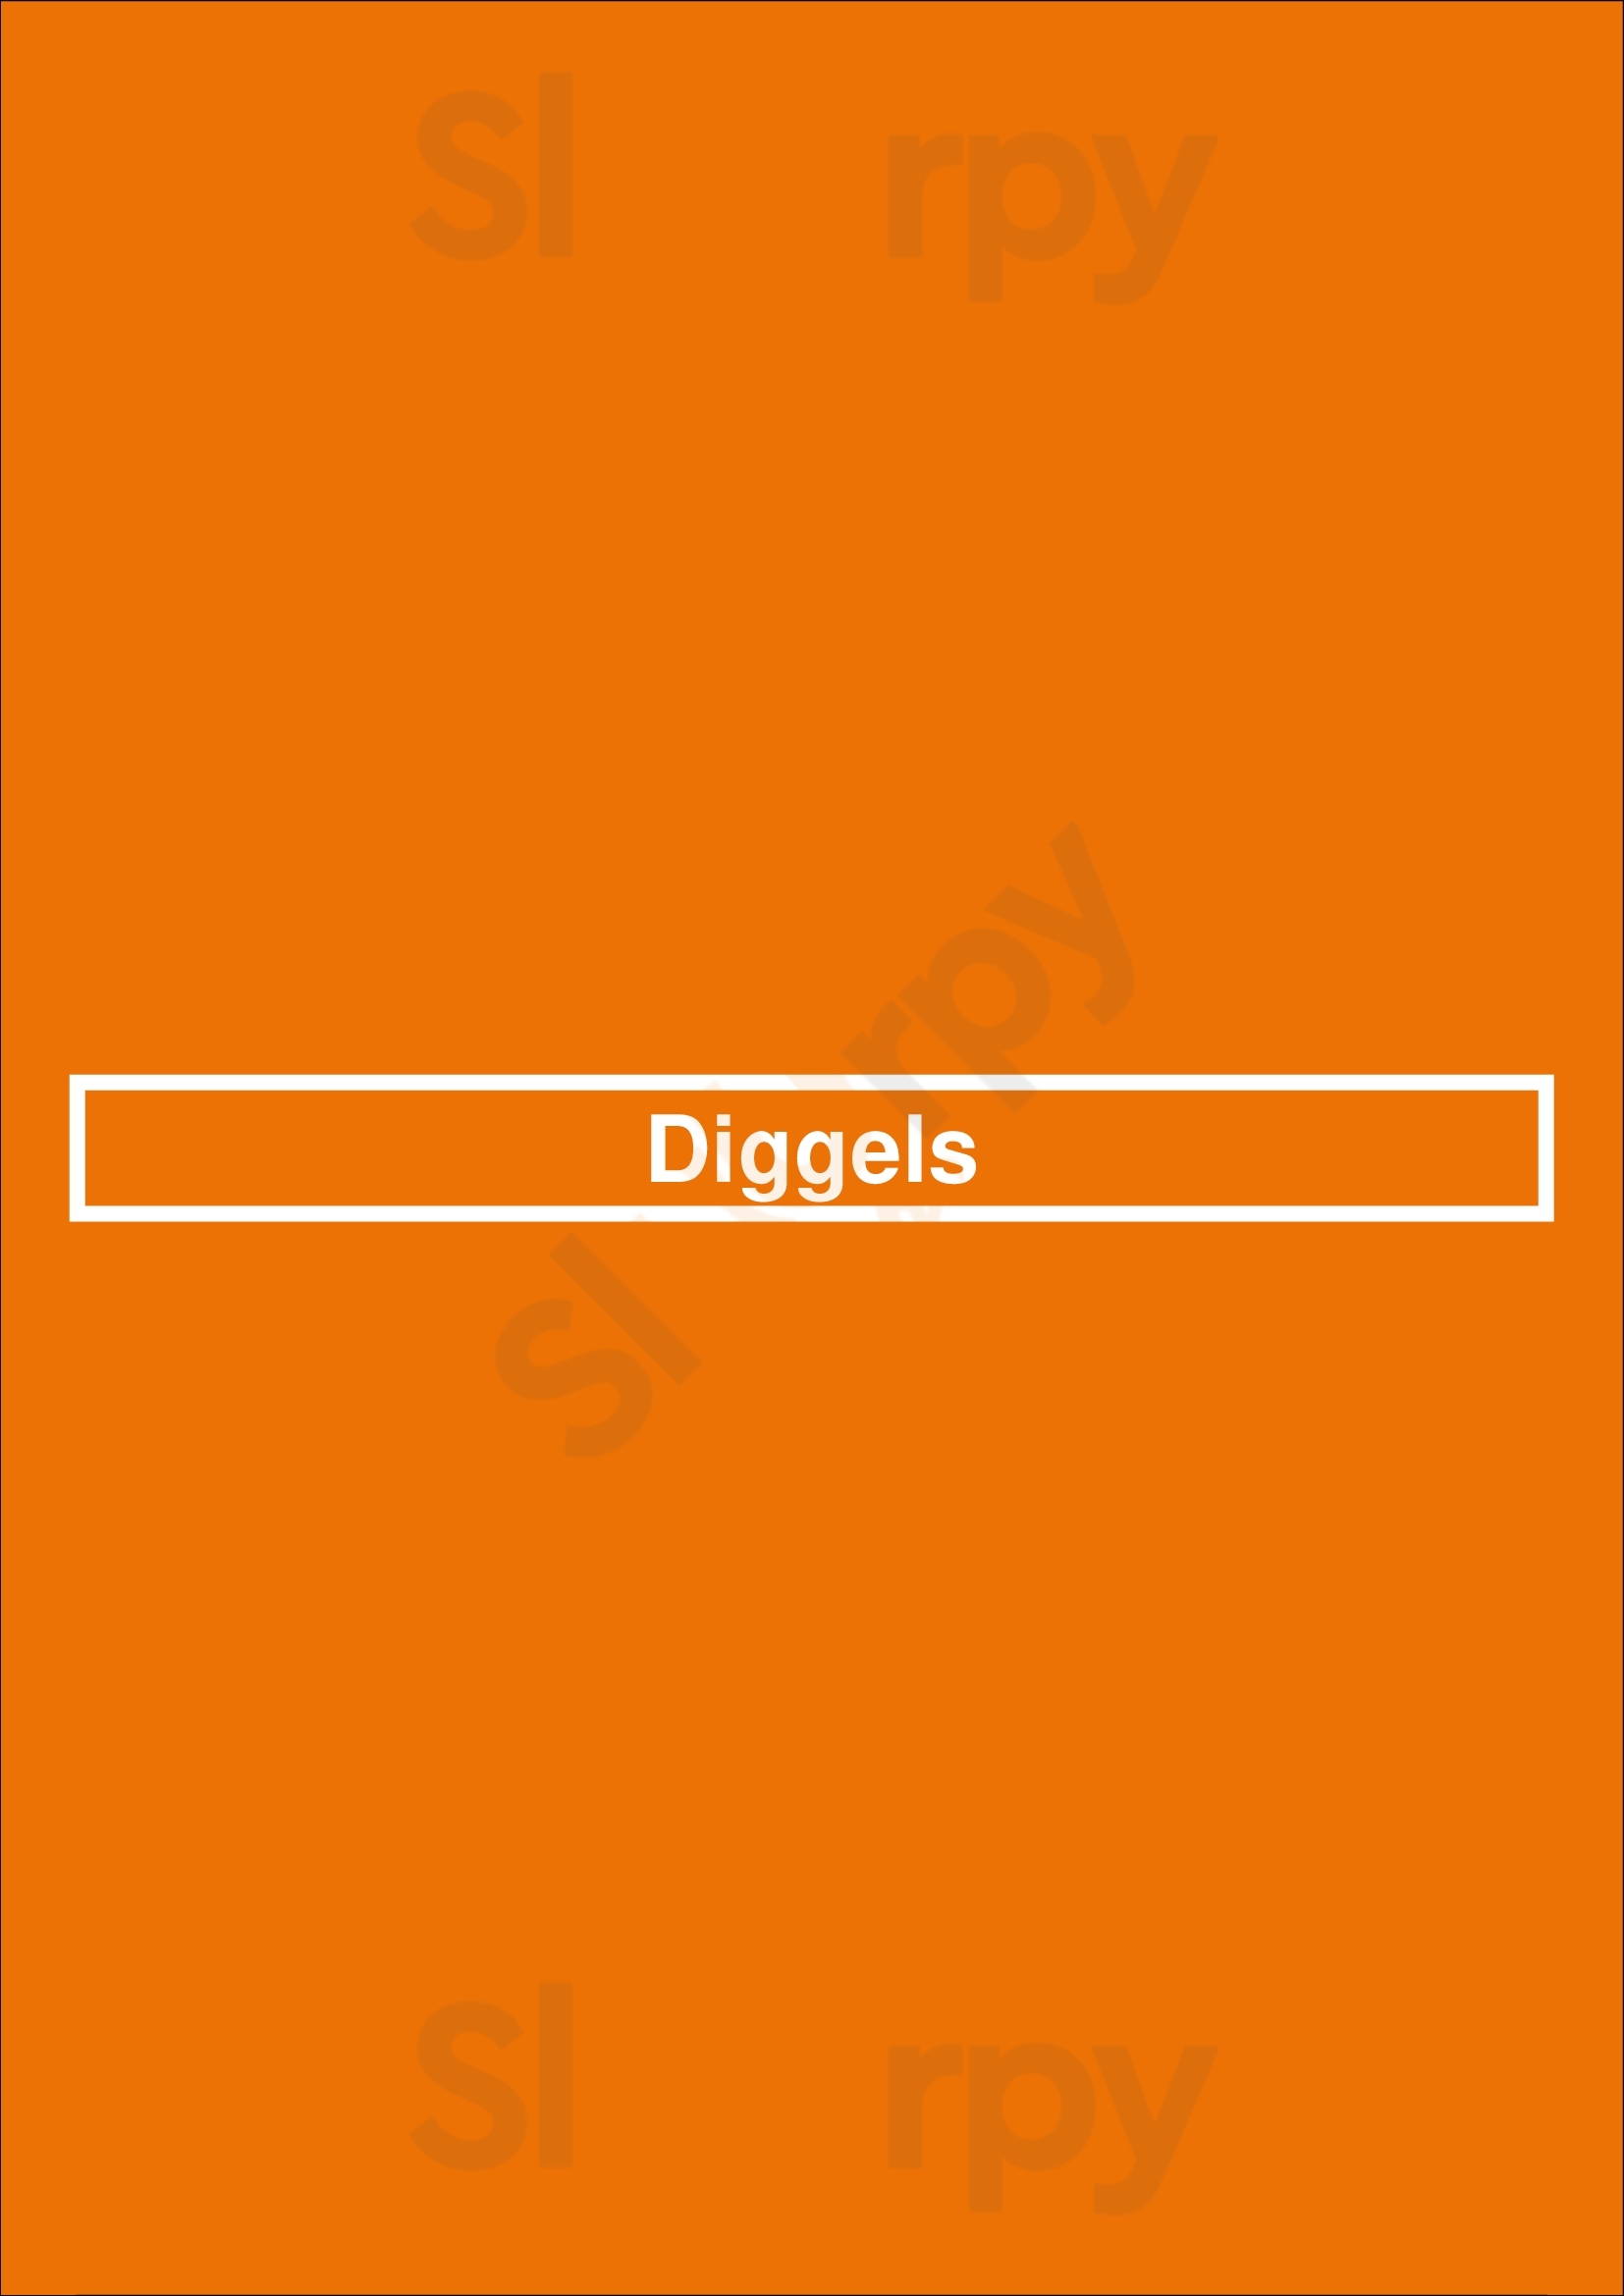 Diggels Oud-Beijerland Menu - 1